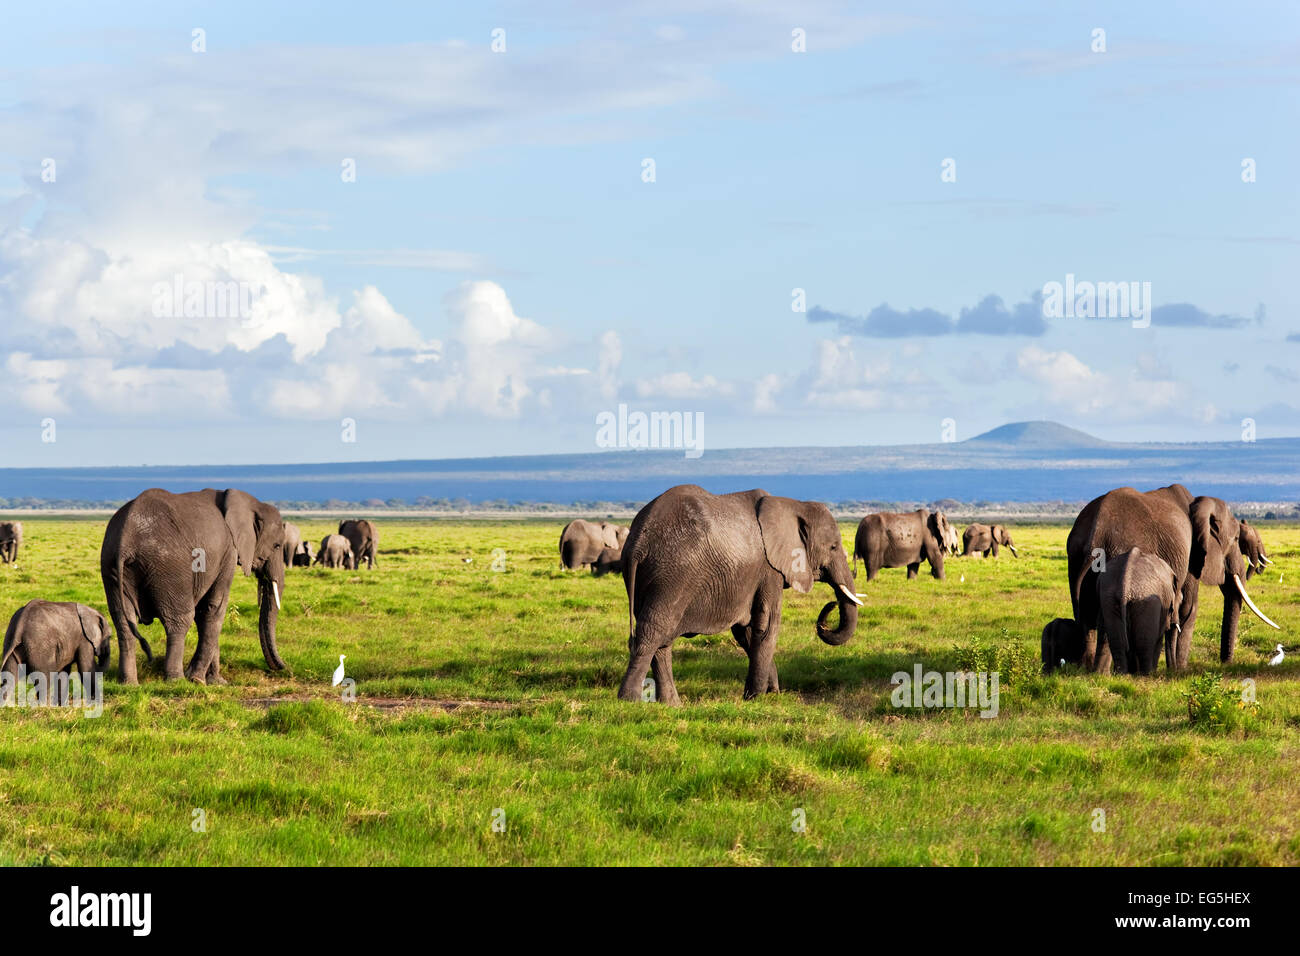 Elephants herd on African savanna walking towards Mount Kilimanjaro. Safari in Amboseli, Kenya, Africa Stock Photo